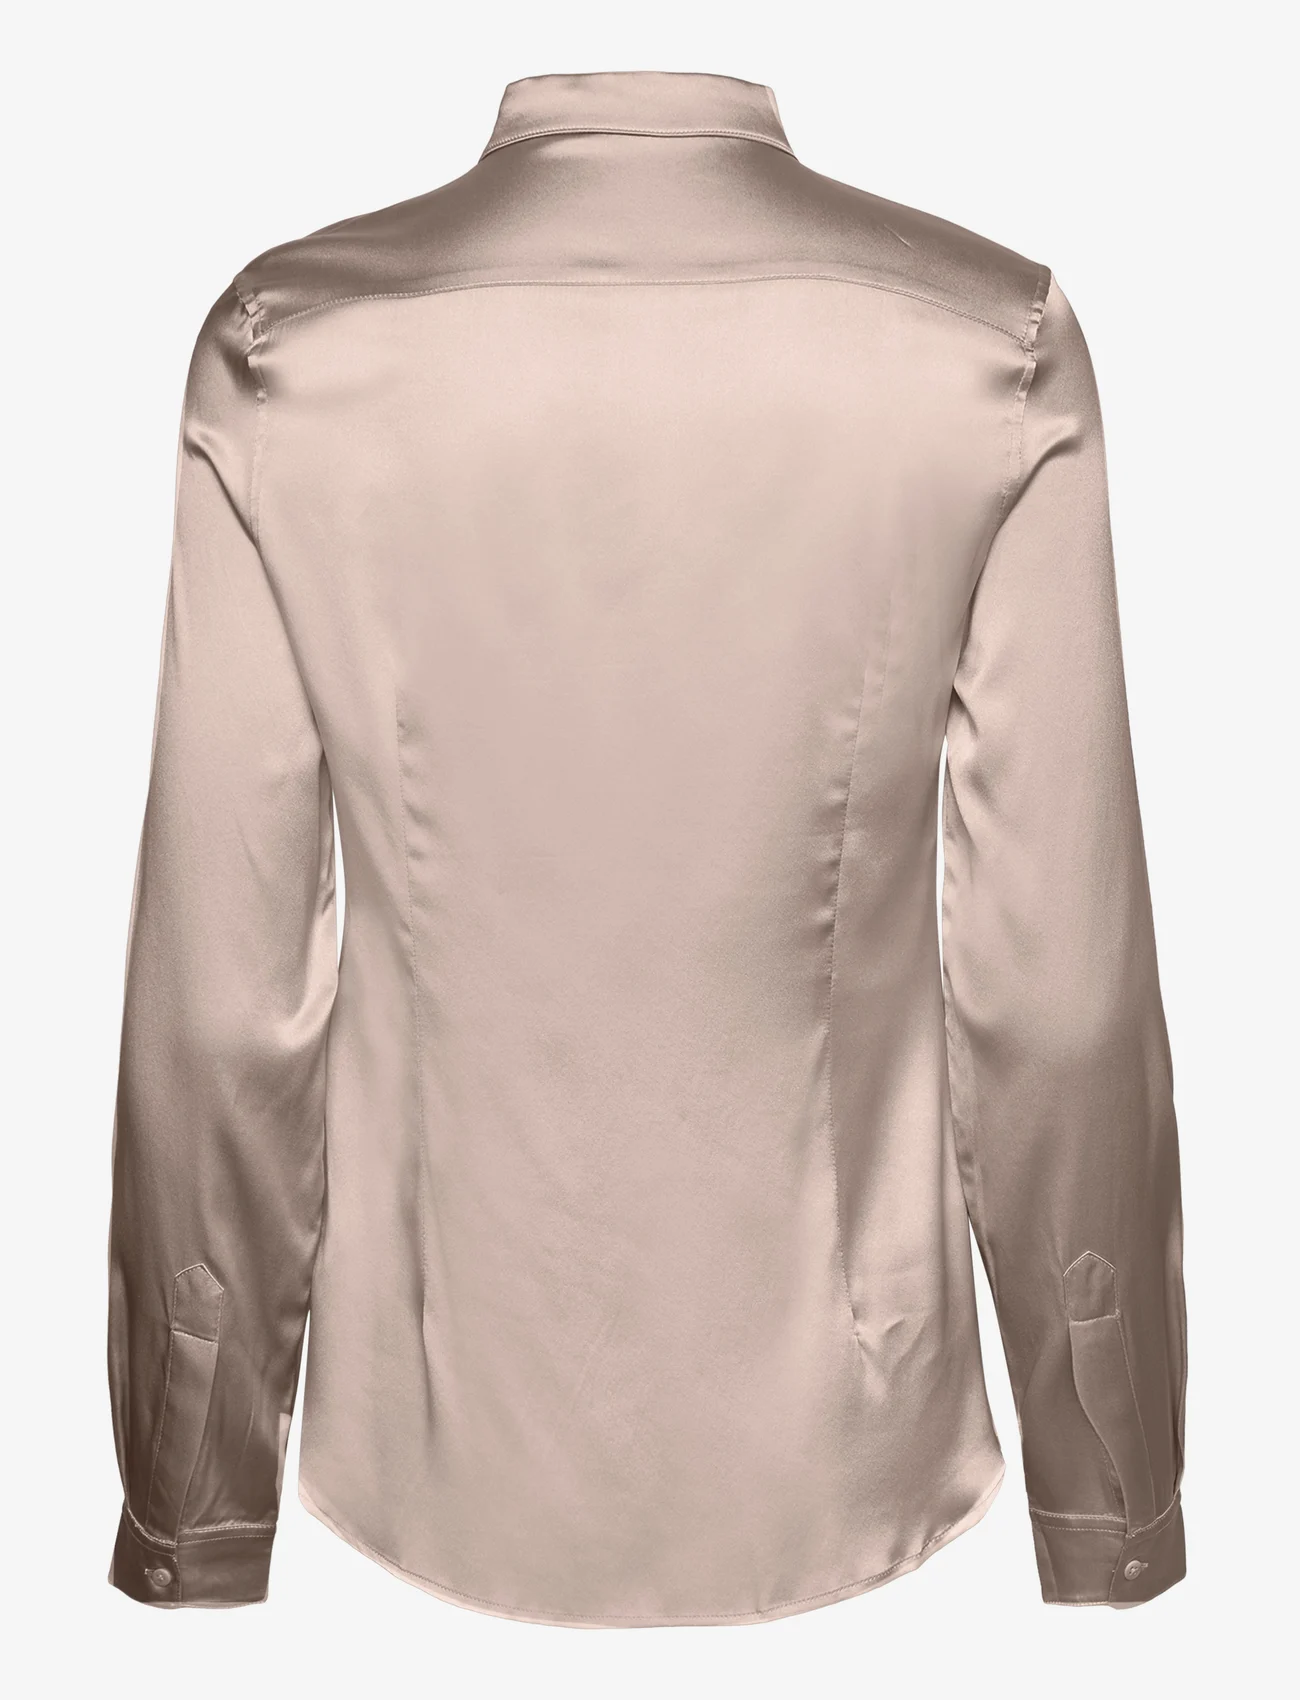 Cathrine Hammel - Silk satin a-line blouse - warm cream - 1